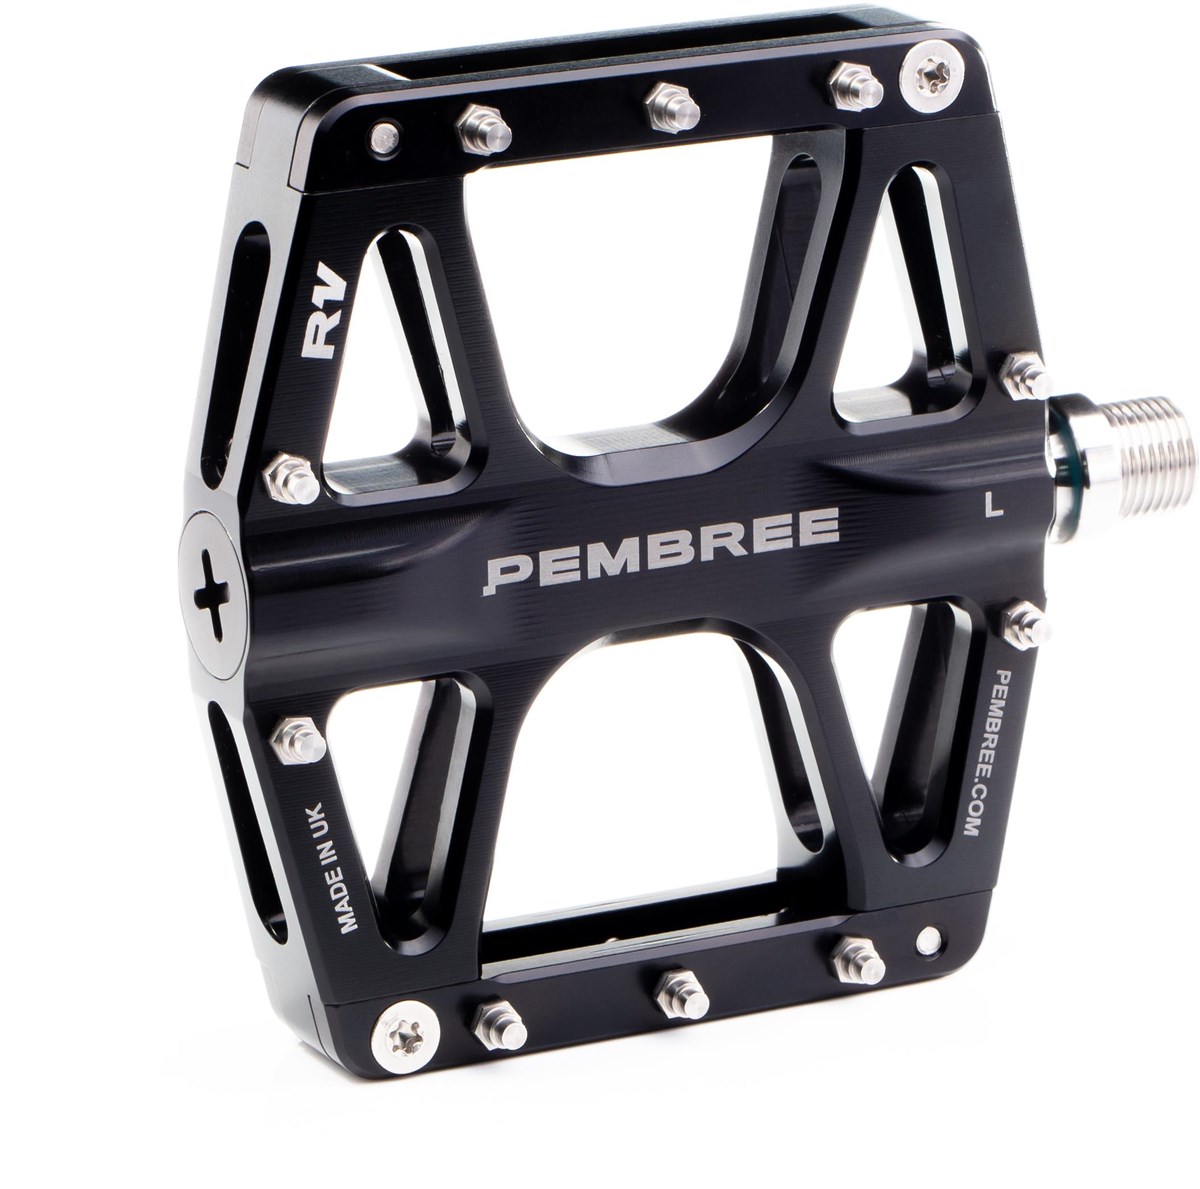 Pembree R1V Pedals product image